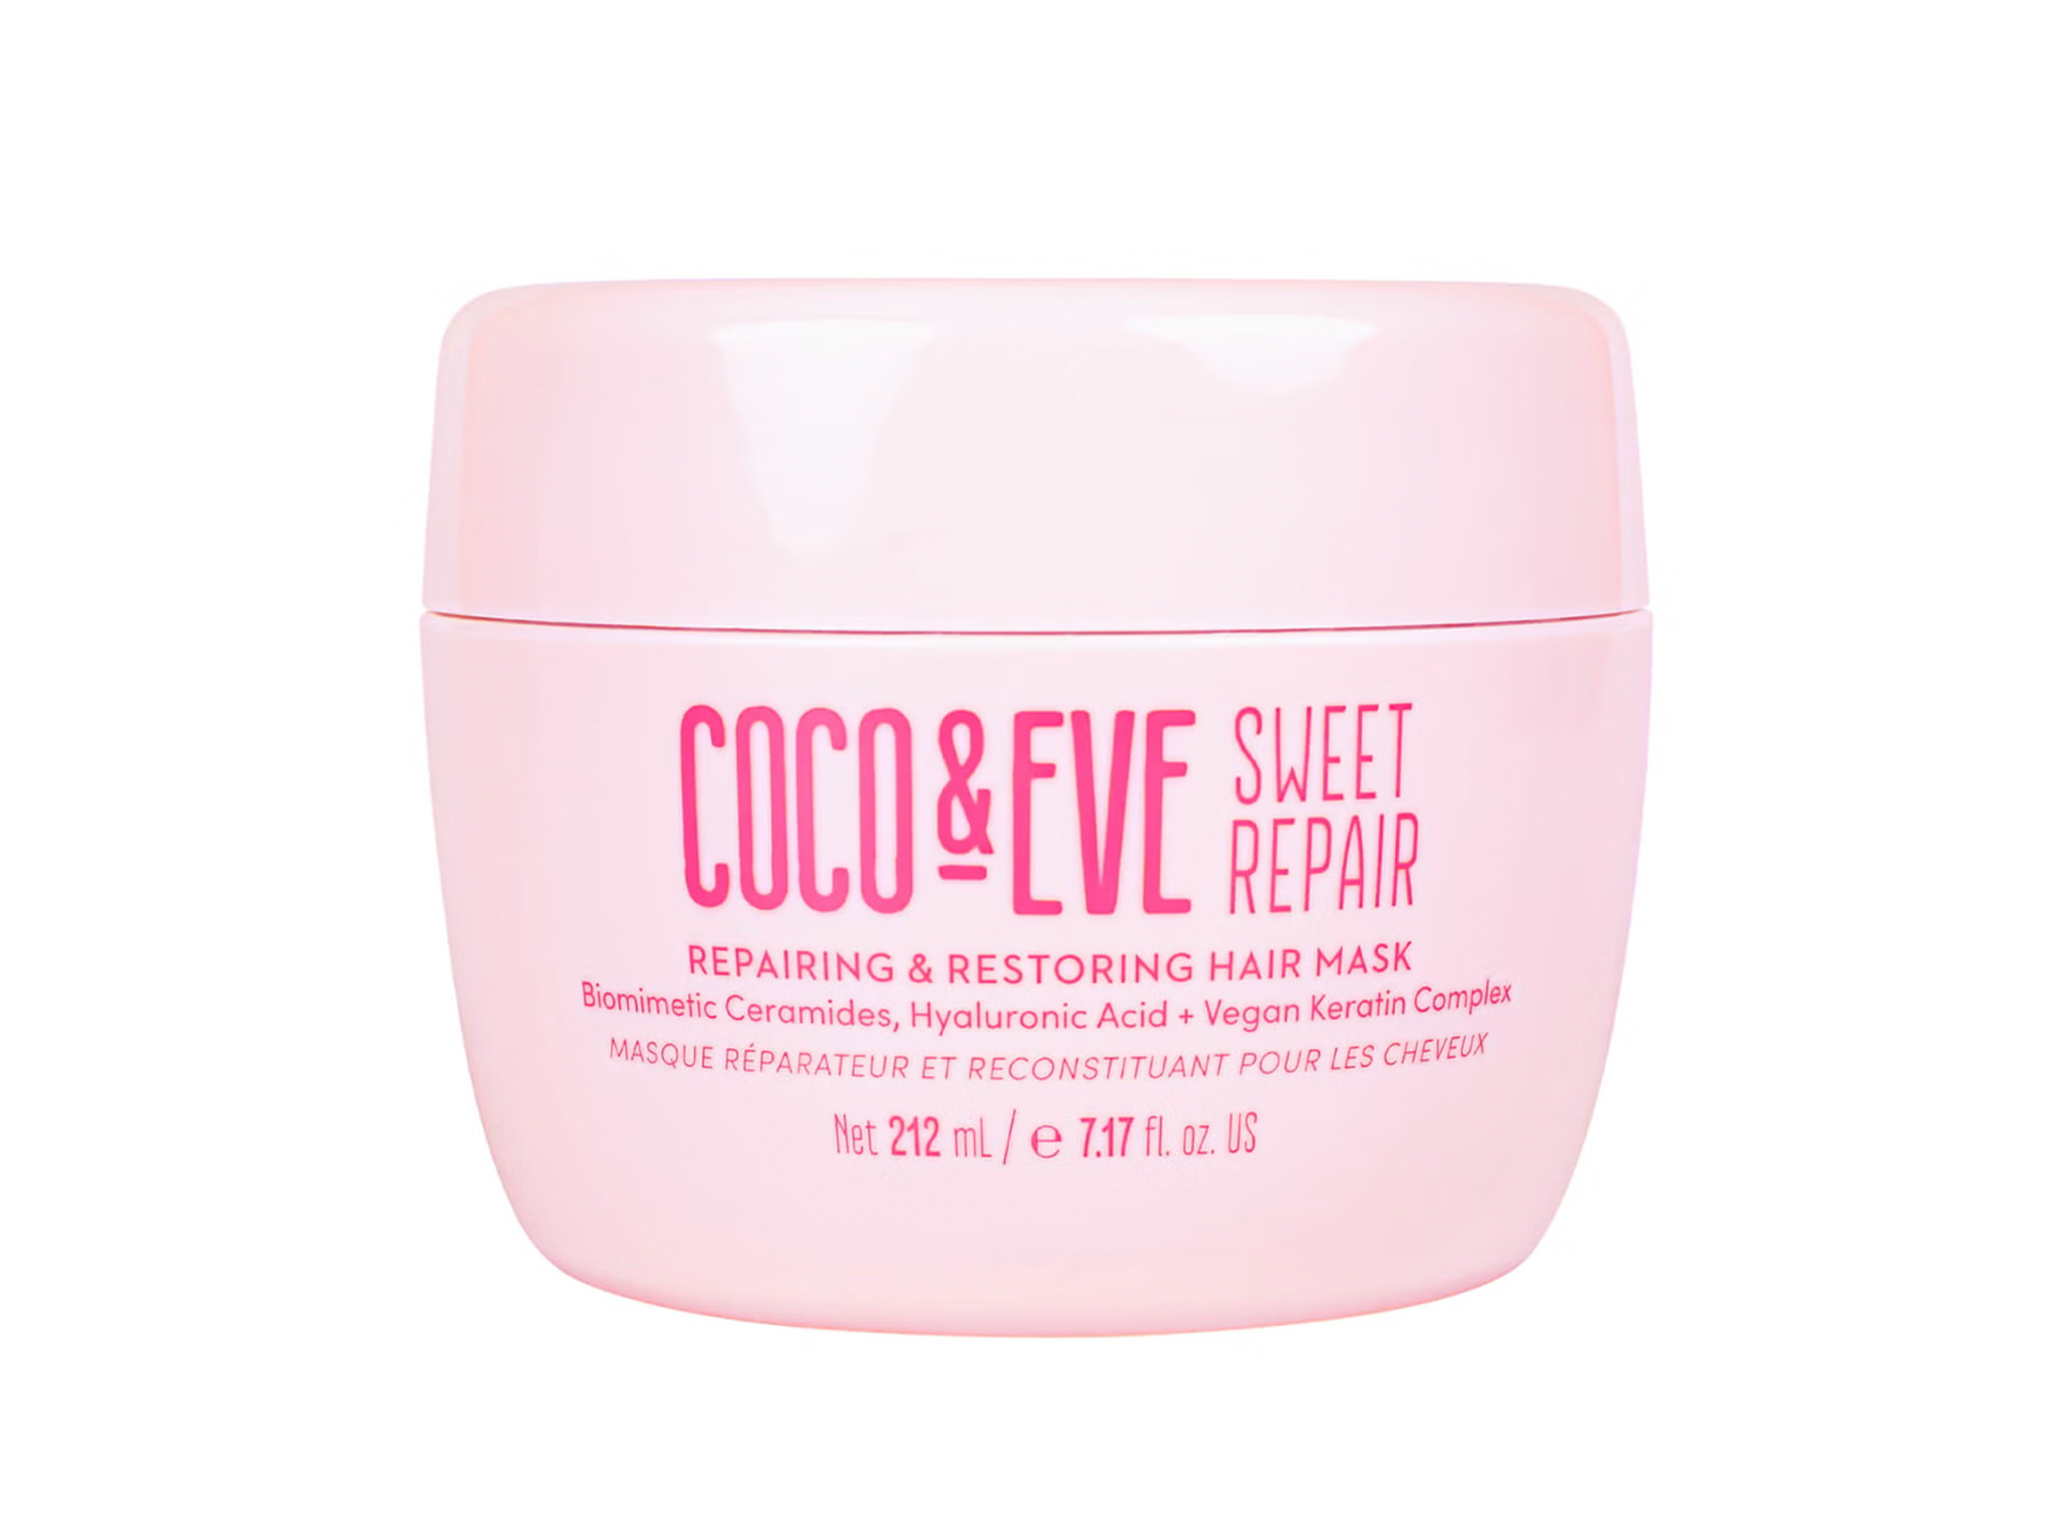 Coco & Eve sweet repair hair mask